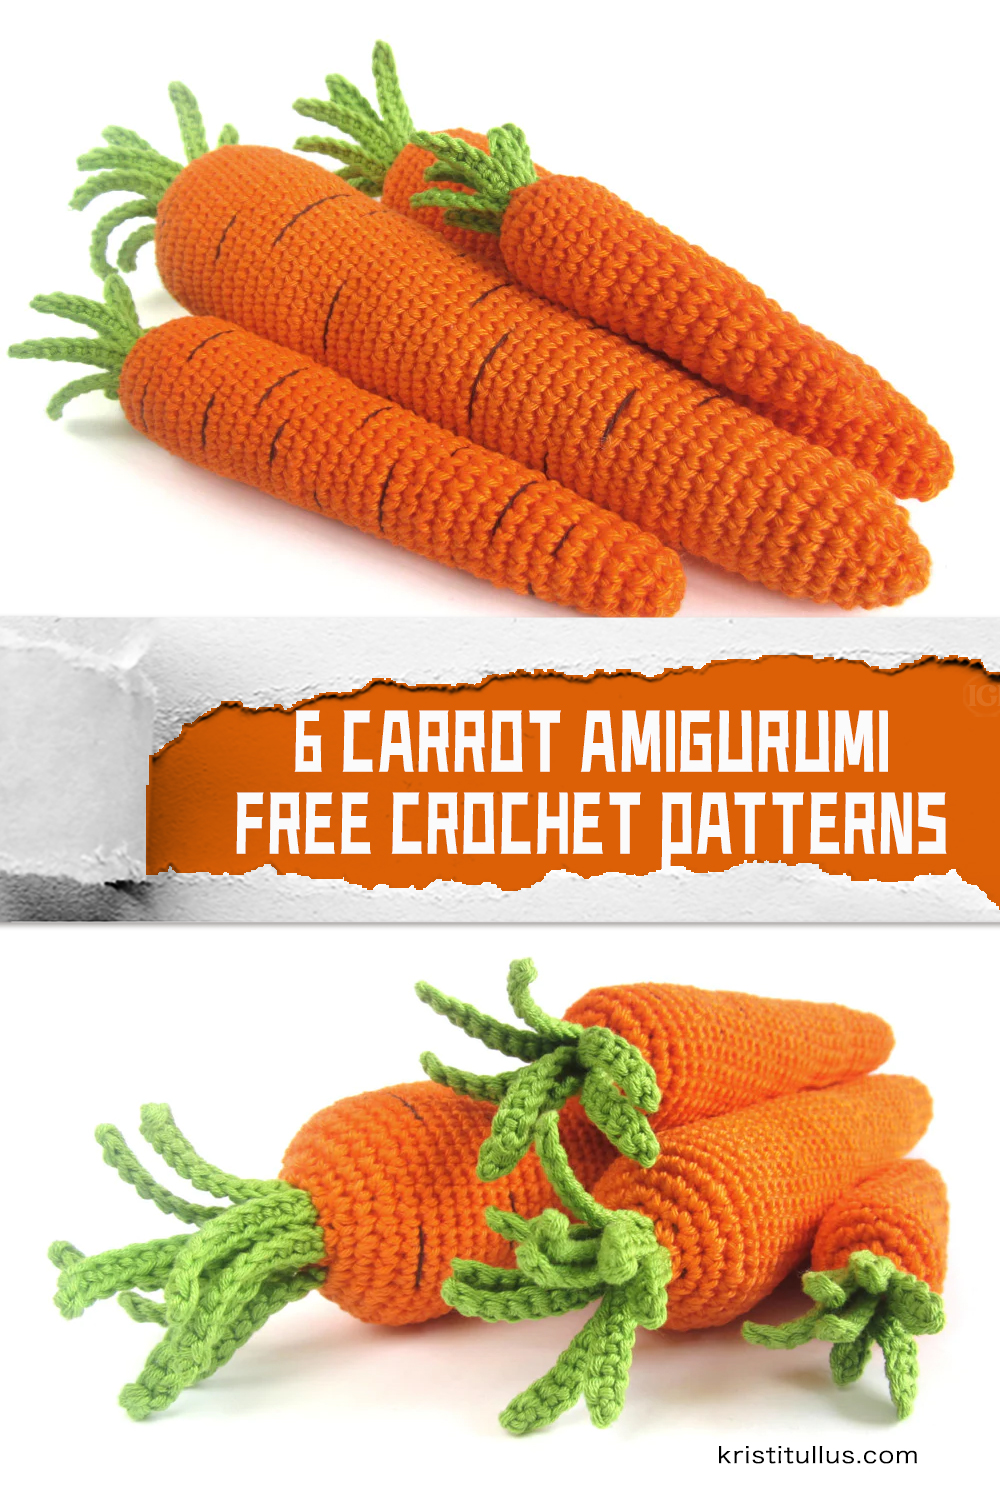 6 FREE Carrot Amigurumi Crochet Patterns